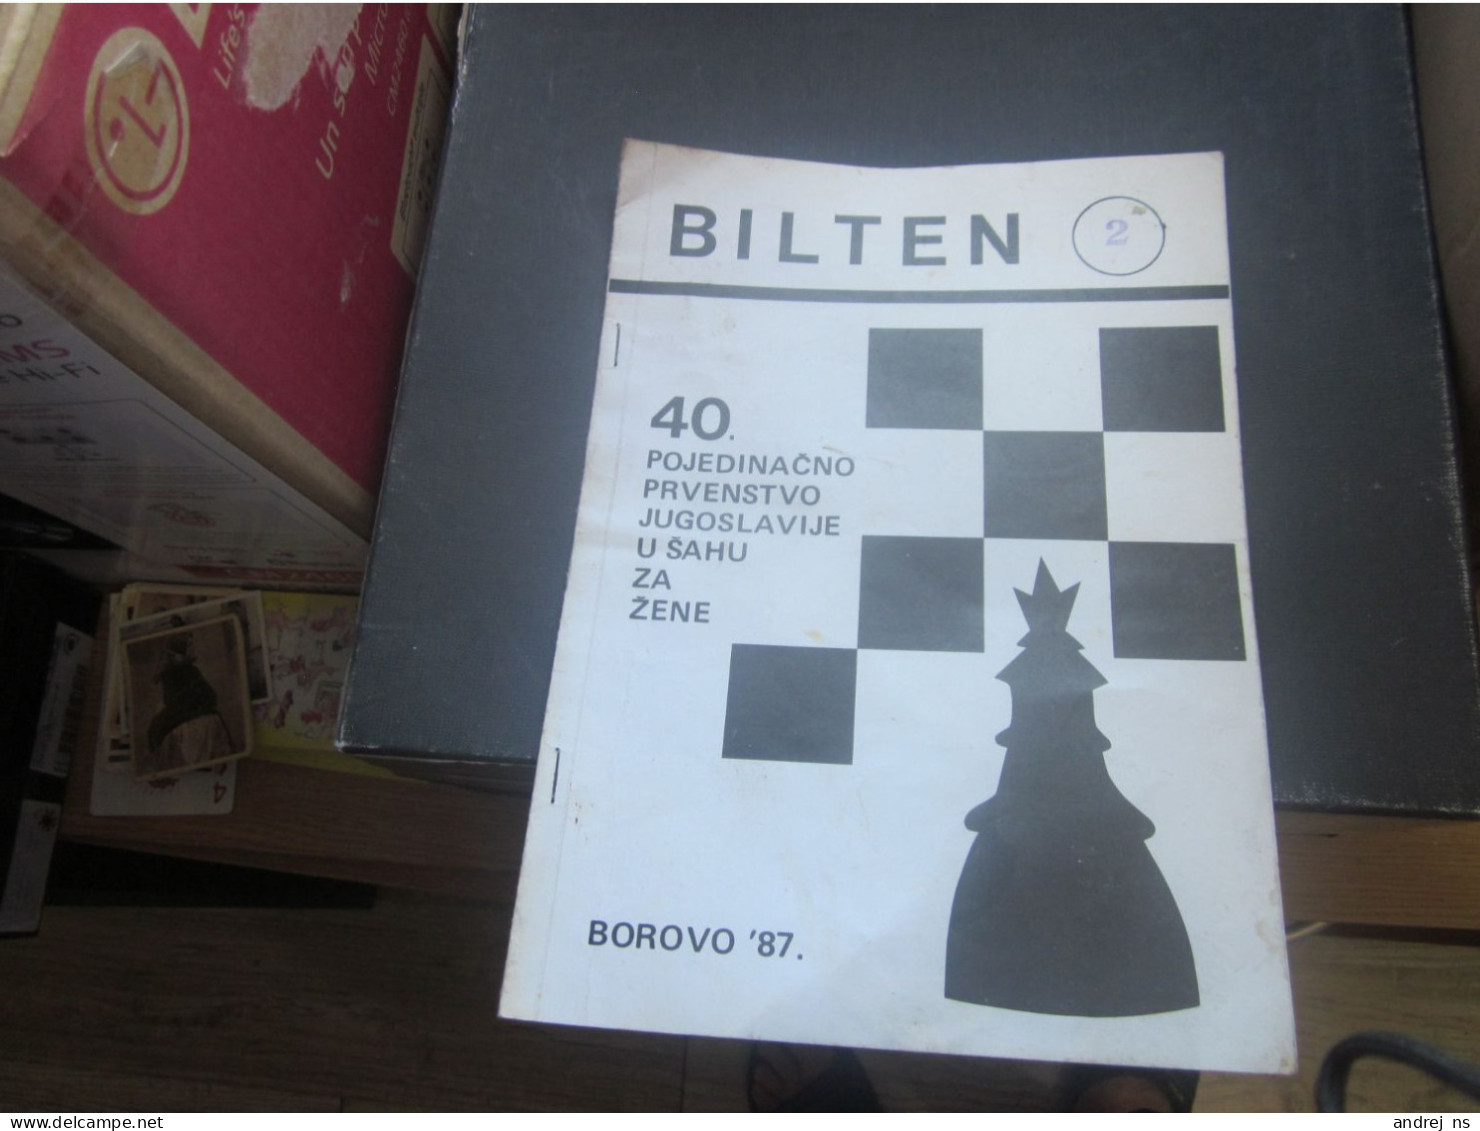 Chess Bilten Prvenstvo Jugoslavije U Sahu Za Zene Borovo - Langues Scandinaves